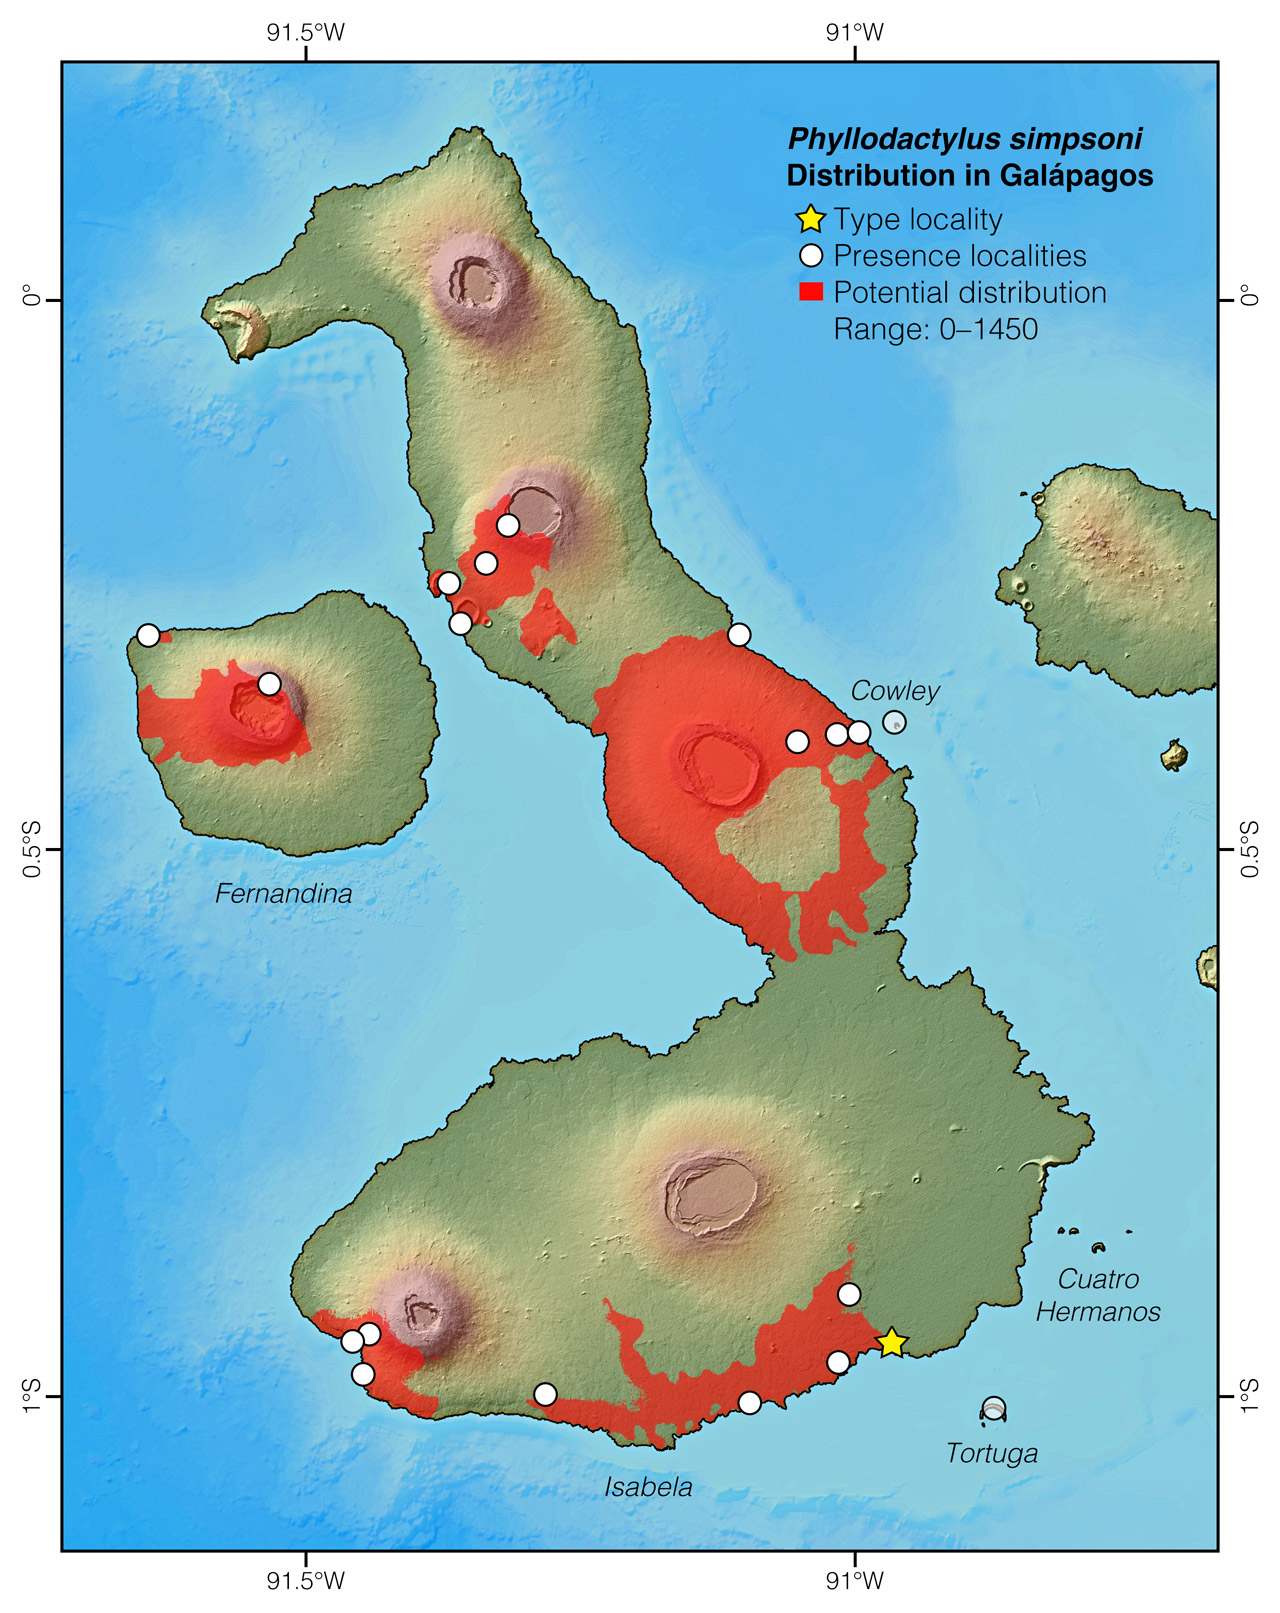 Distribution of Phyllodactylus simpsoni in Isabela Island